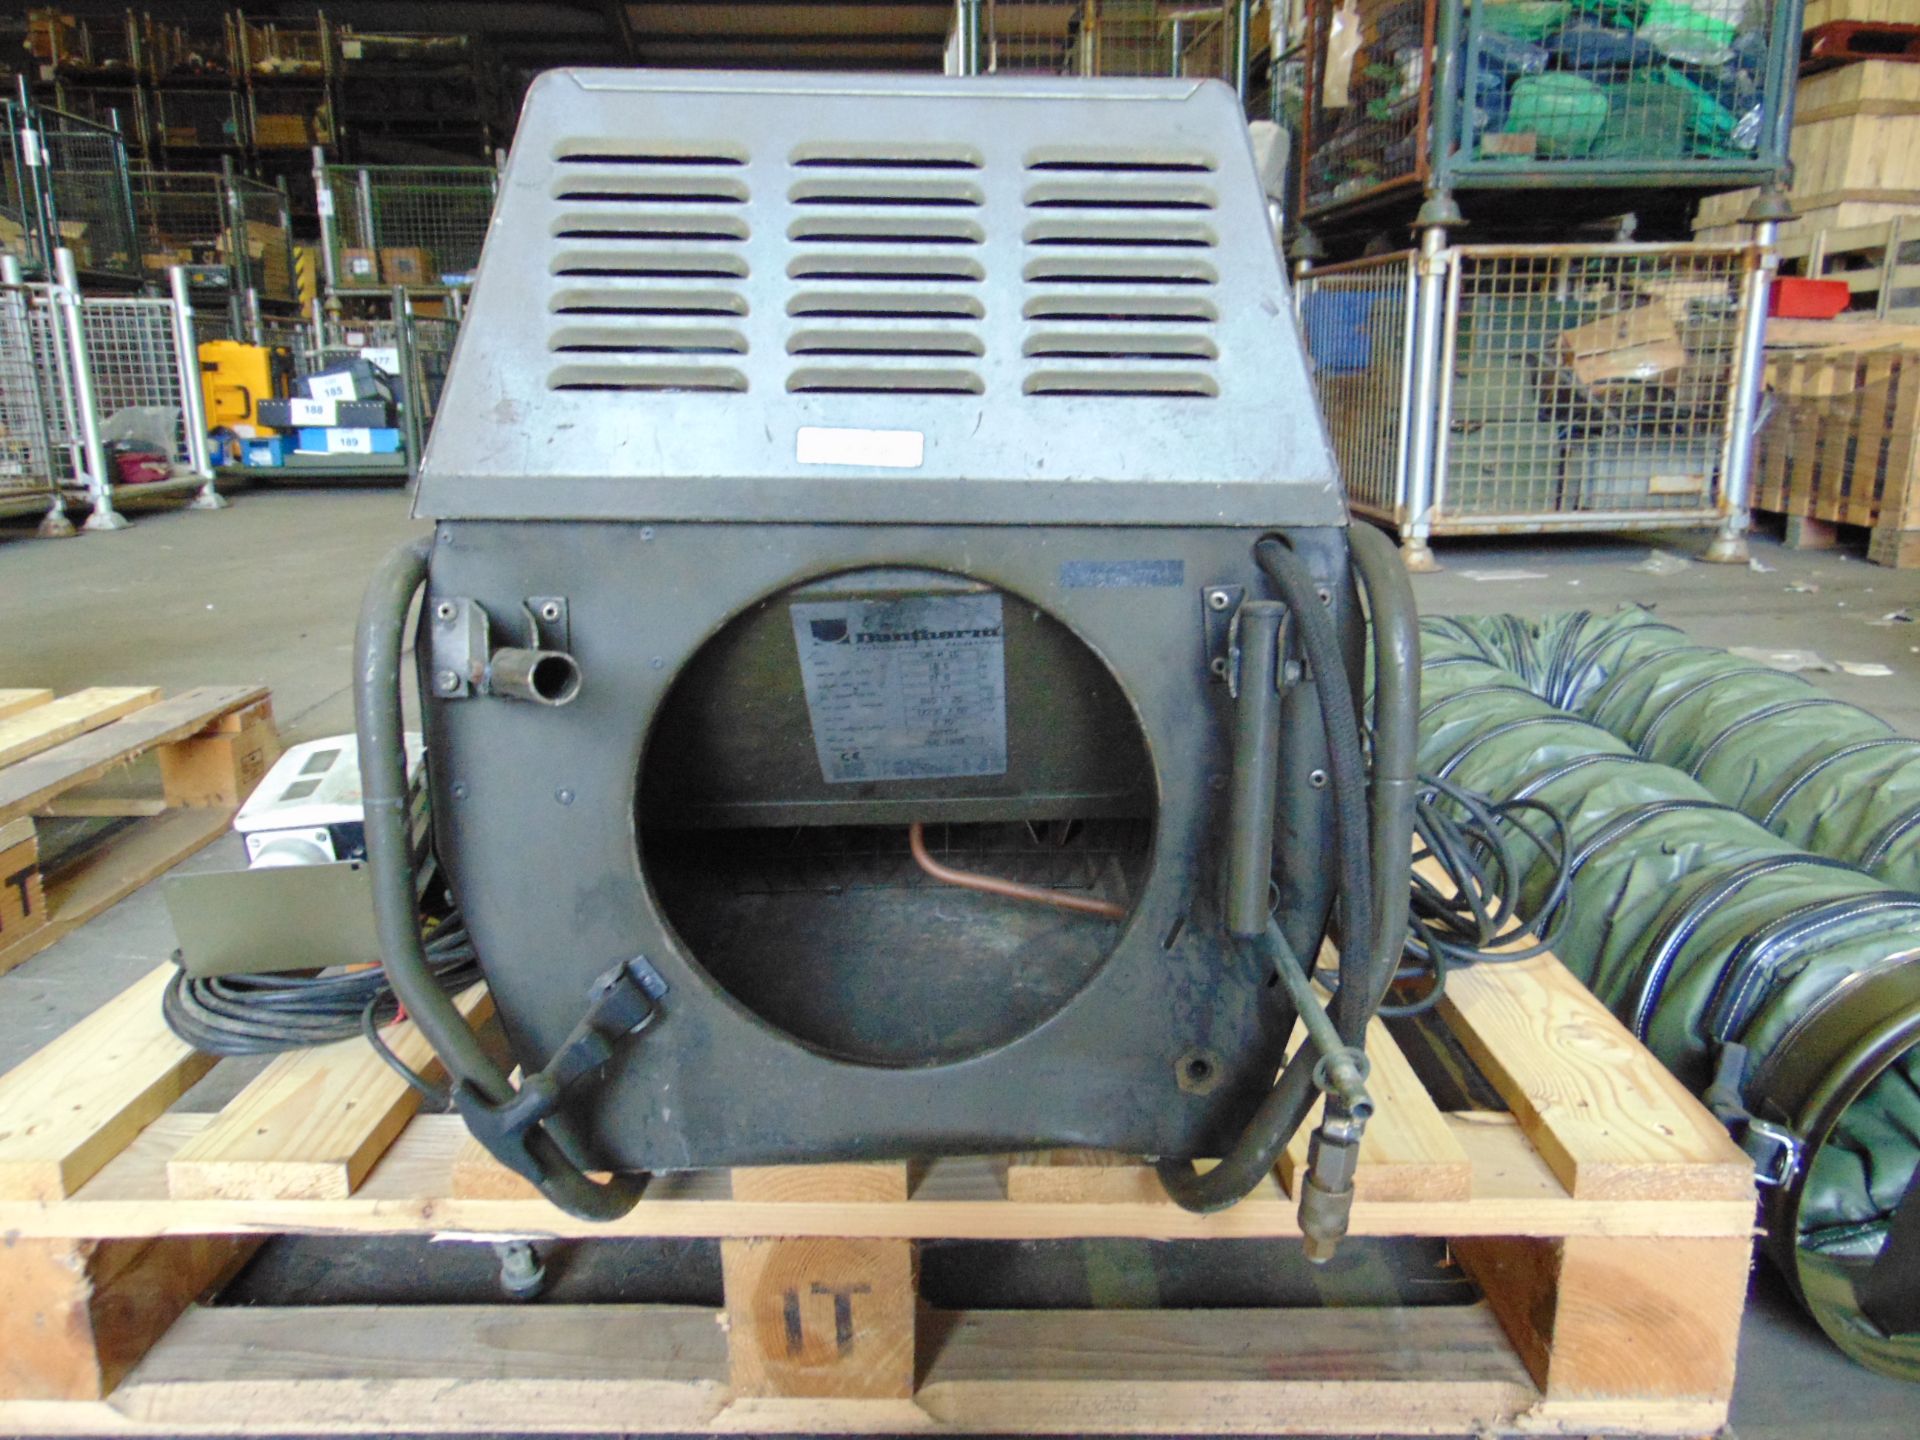 Dantherm VAM 15 portable workshop/building heater 240 volt c/w accessories as shown - Image 7 of 14